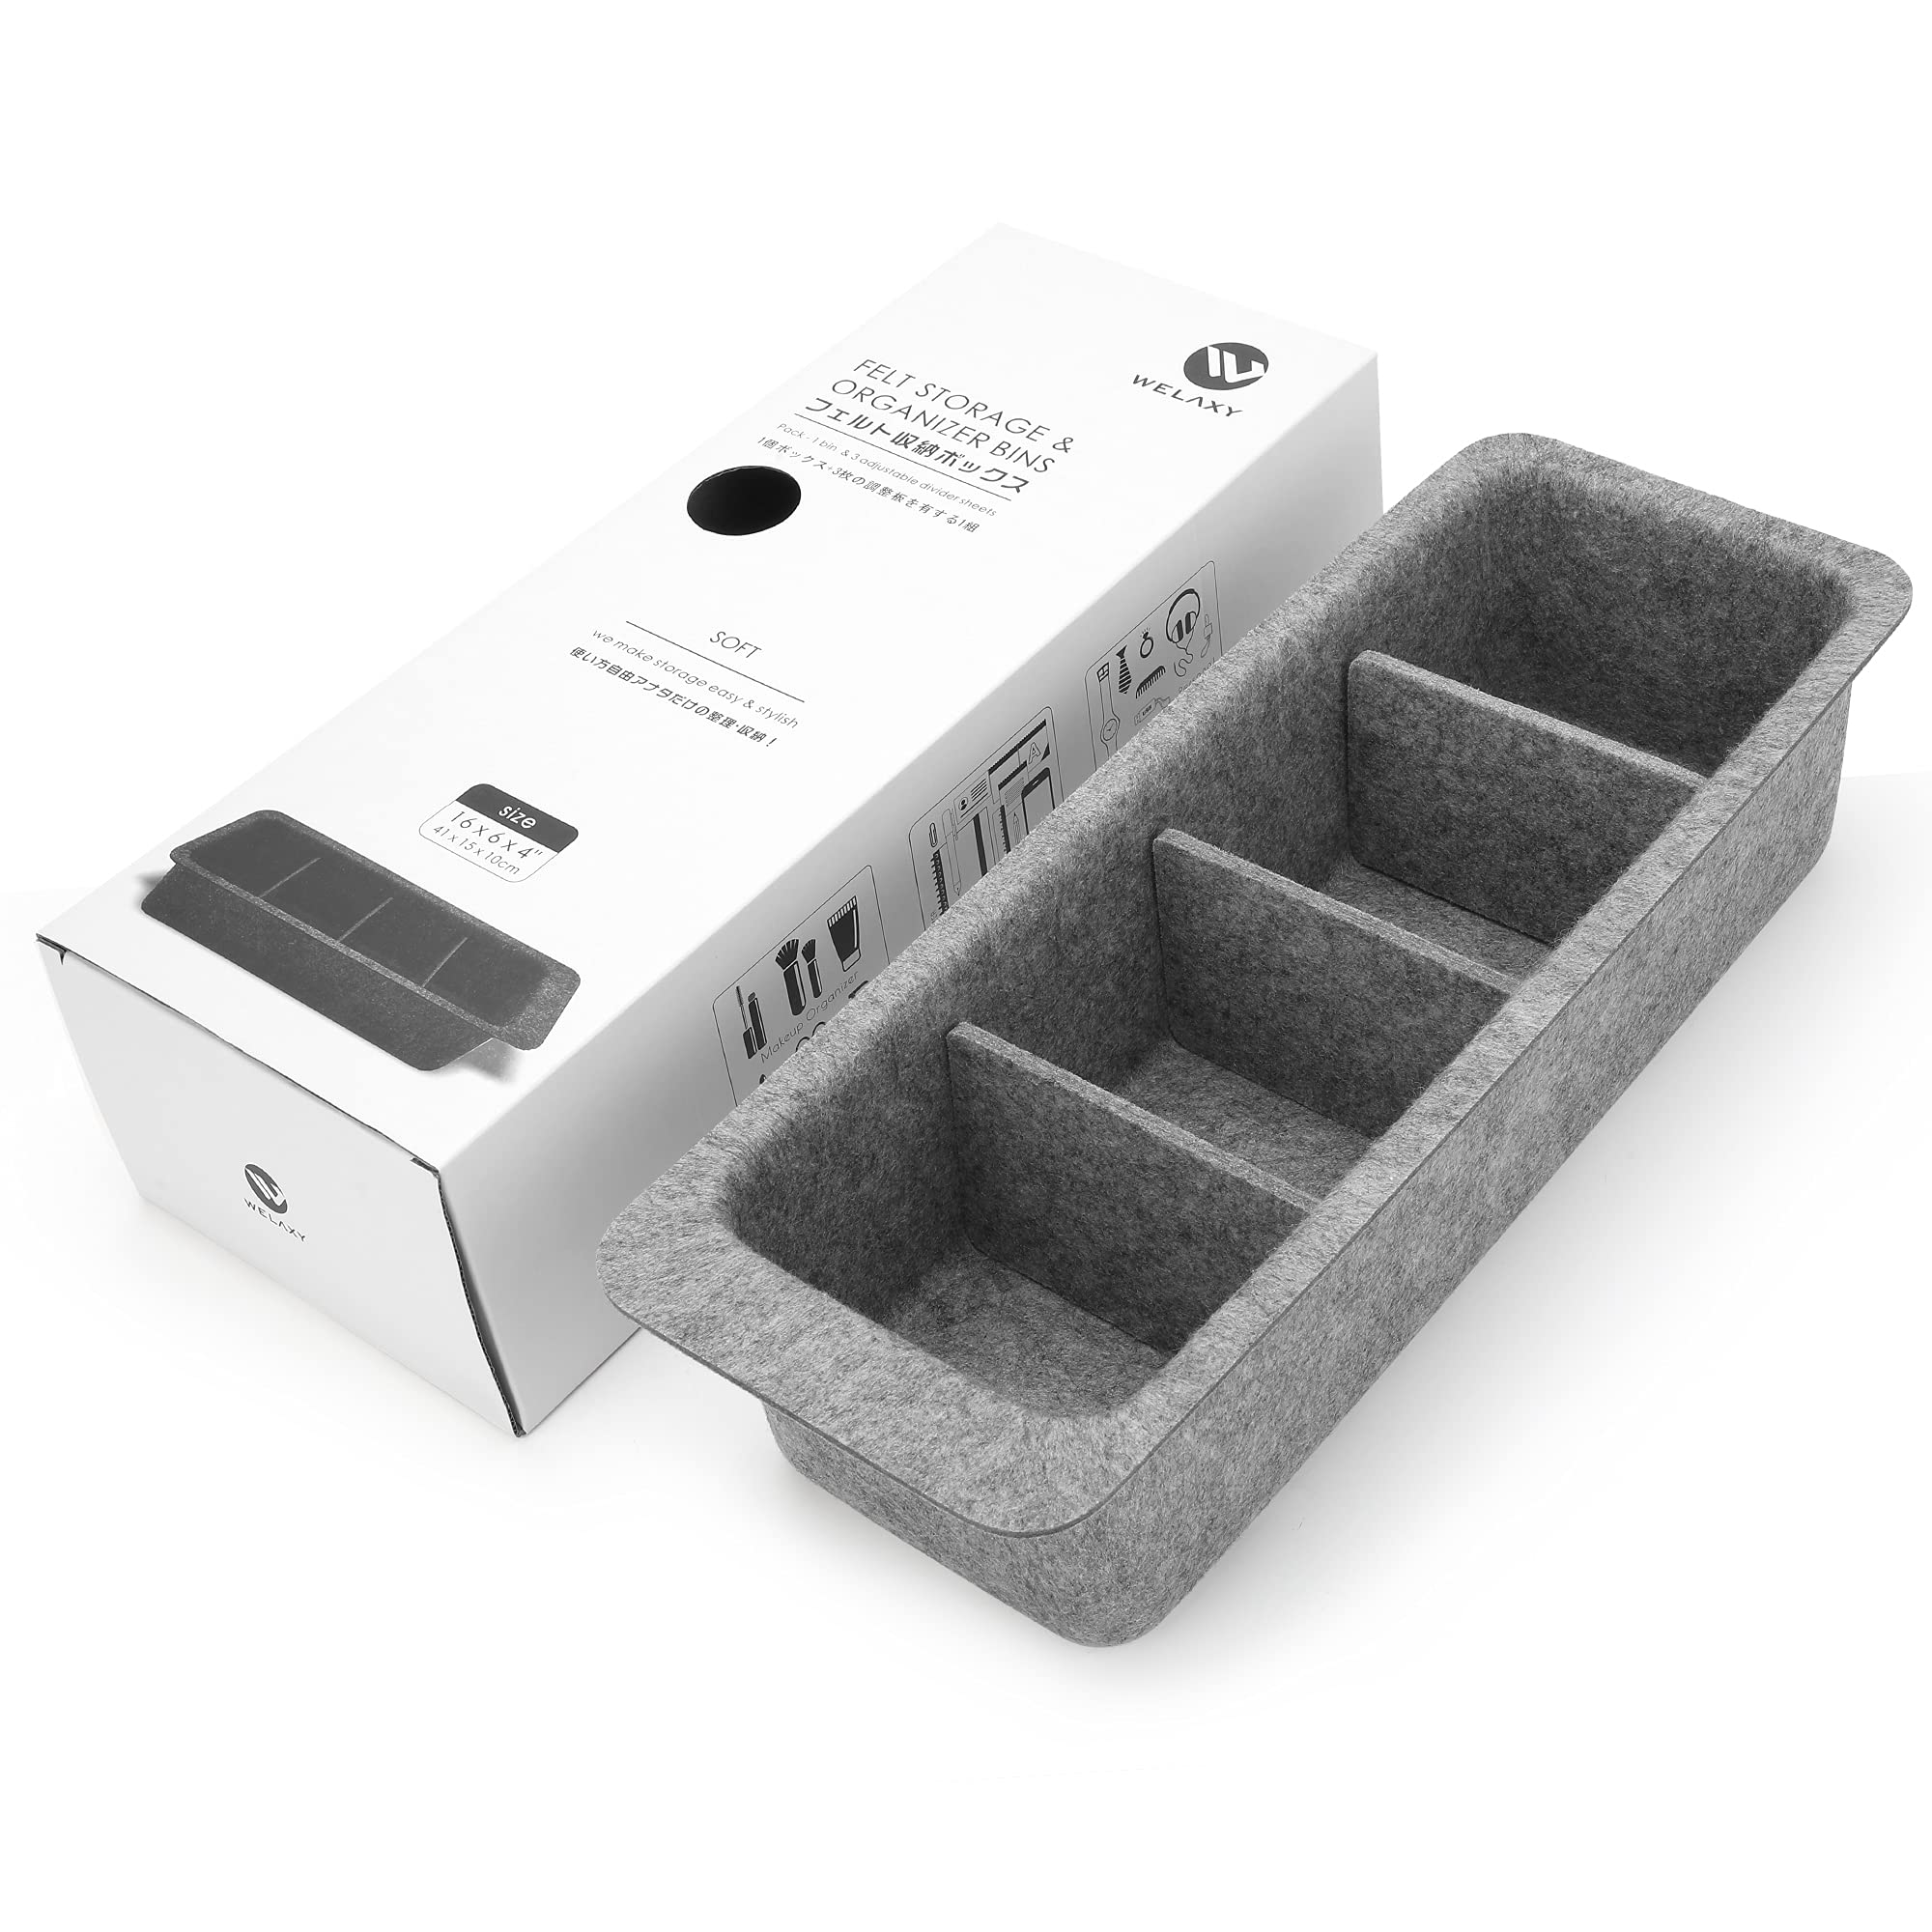 WELAXY Cabinet Pantry Organizers Desk drawer organizer bin with 4 adjustable compartment Felt ( Gray)